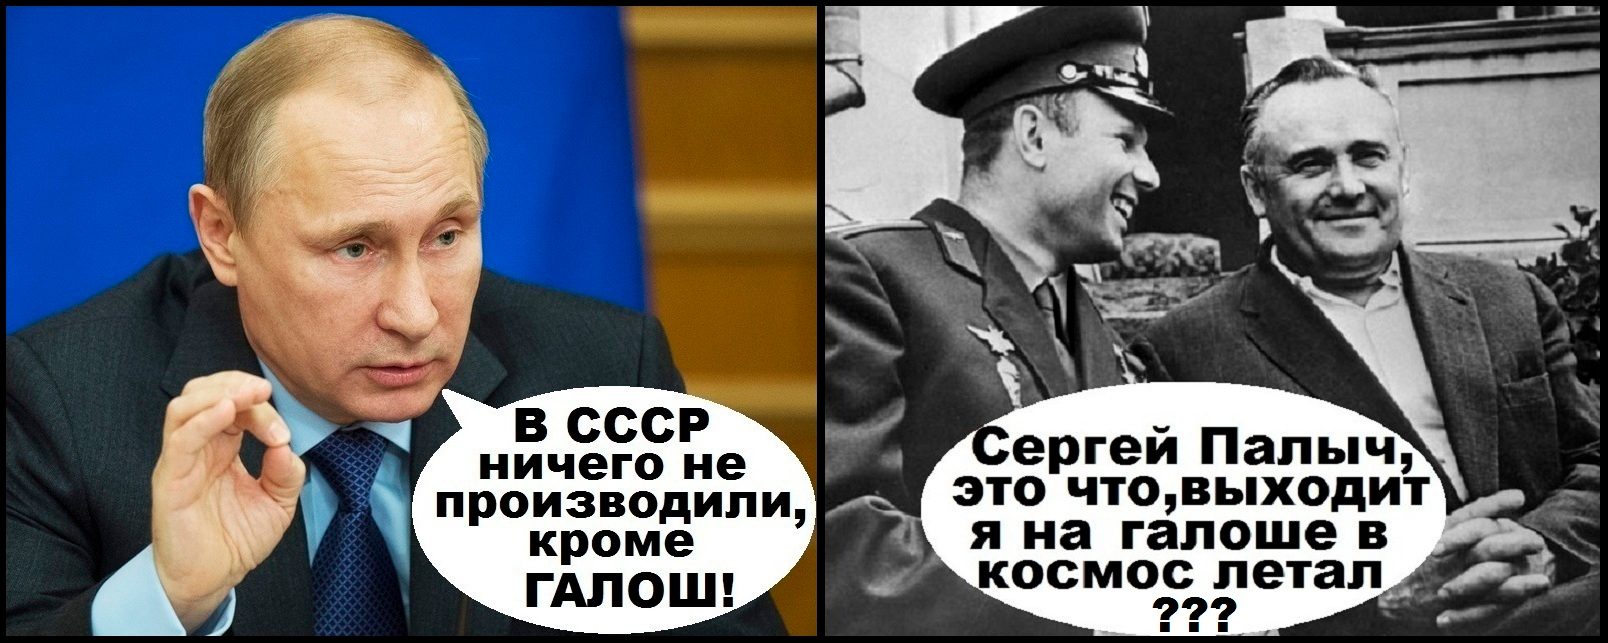 Путин, галоши и промытые мозги (KorchaginSA)